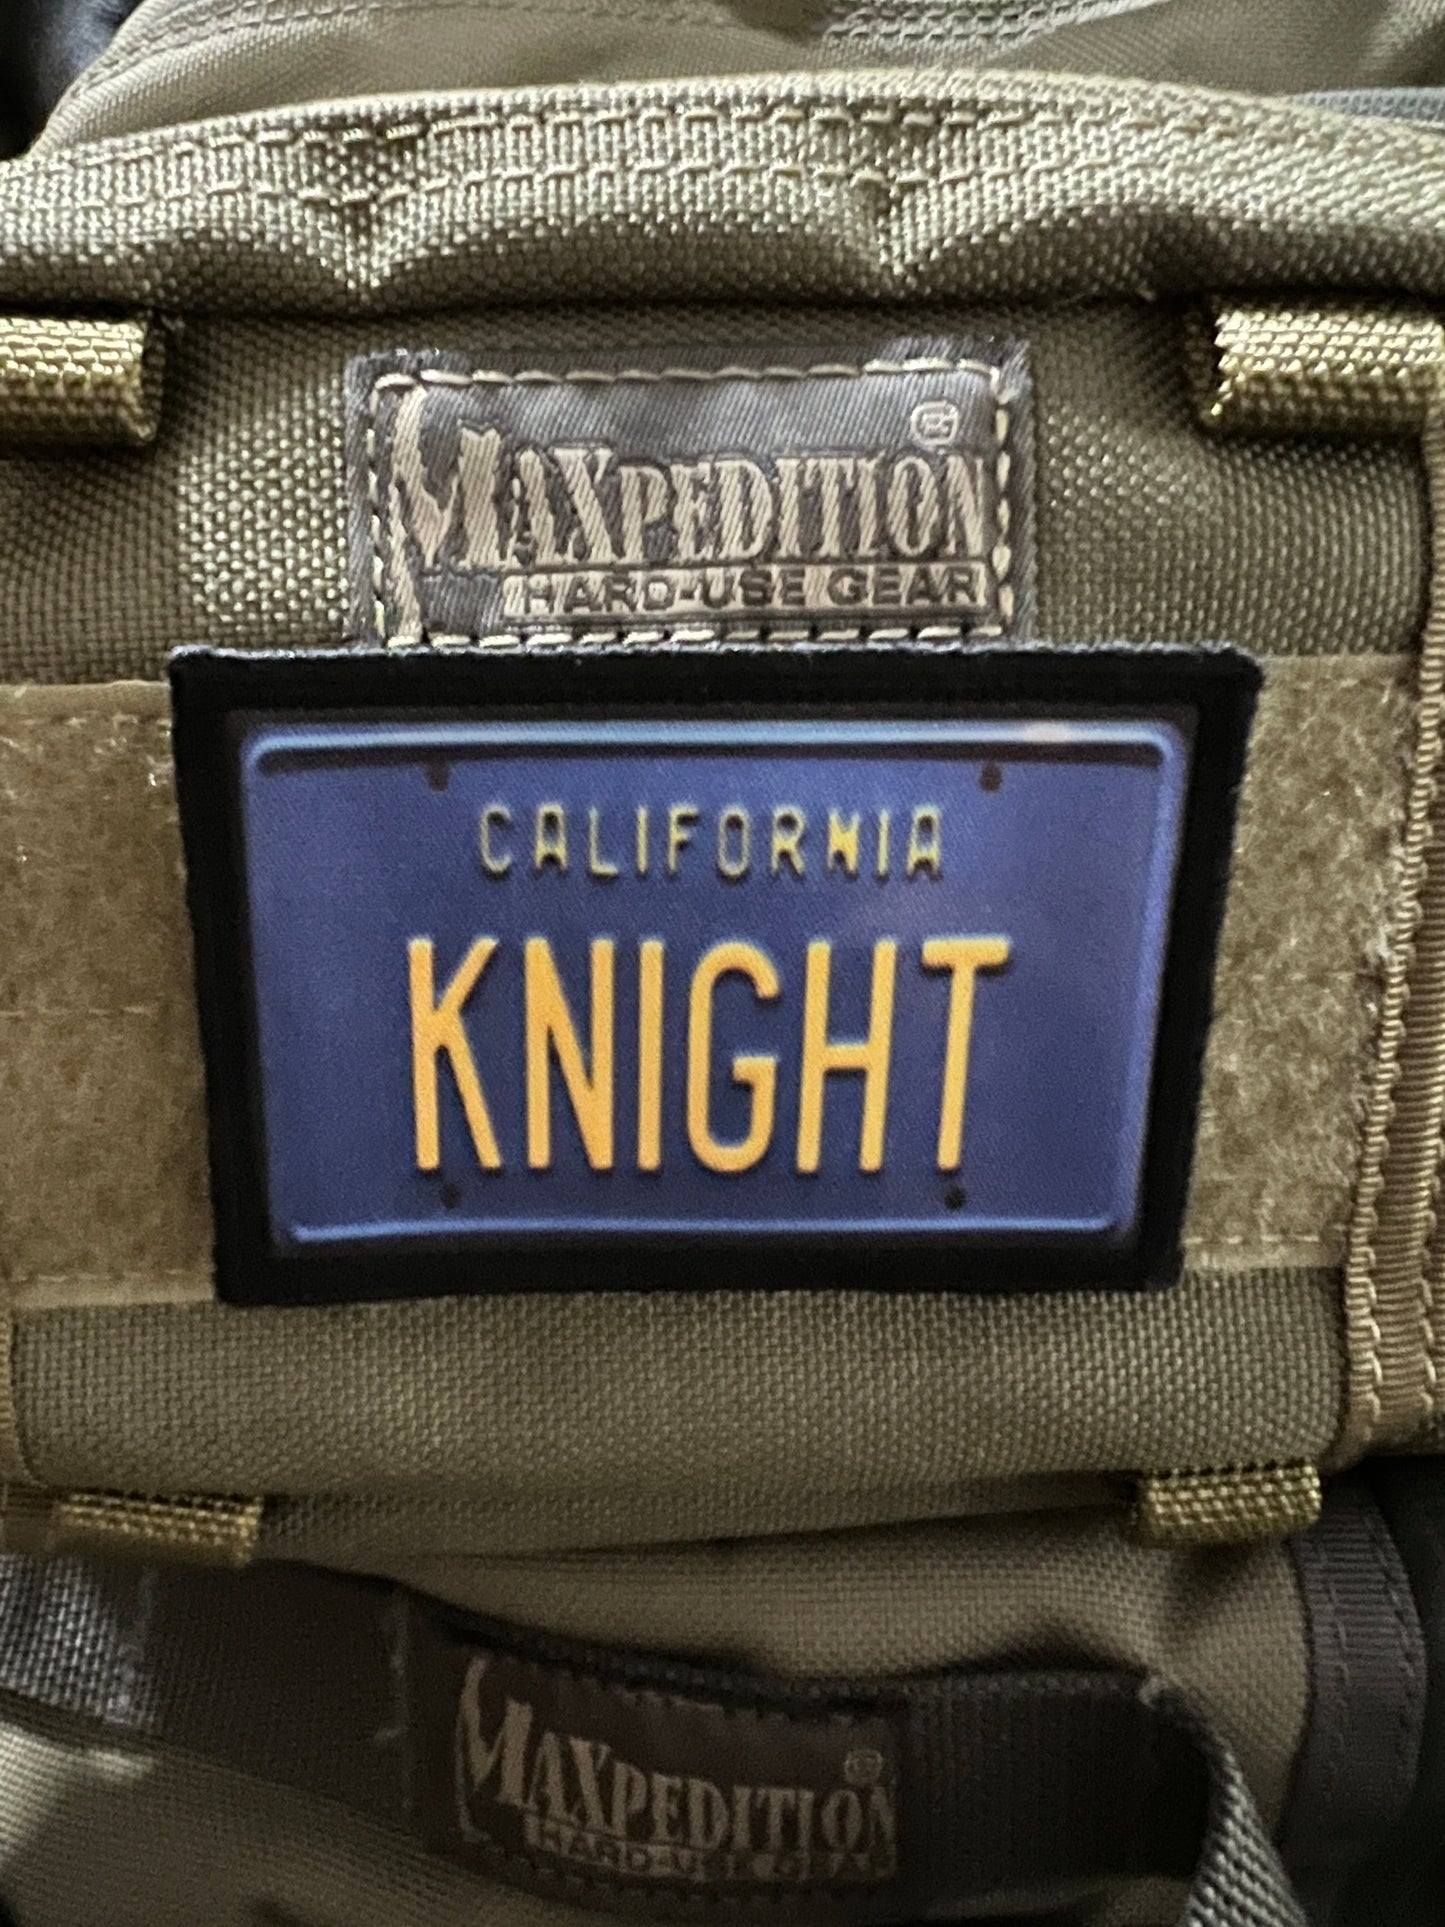 Knight Rider License Plate2